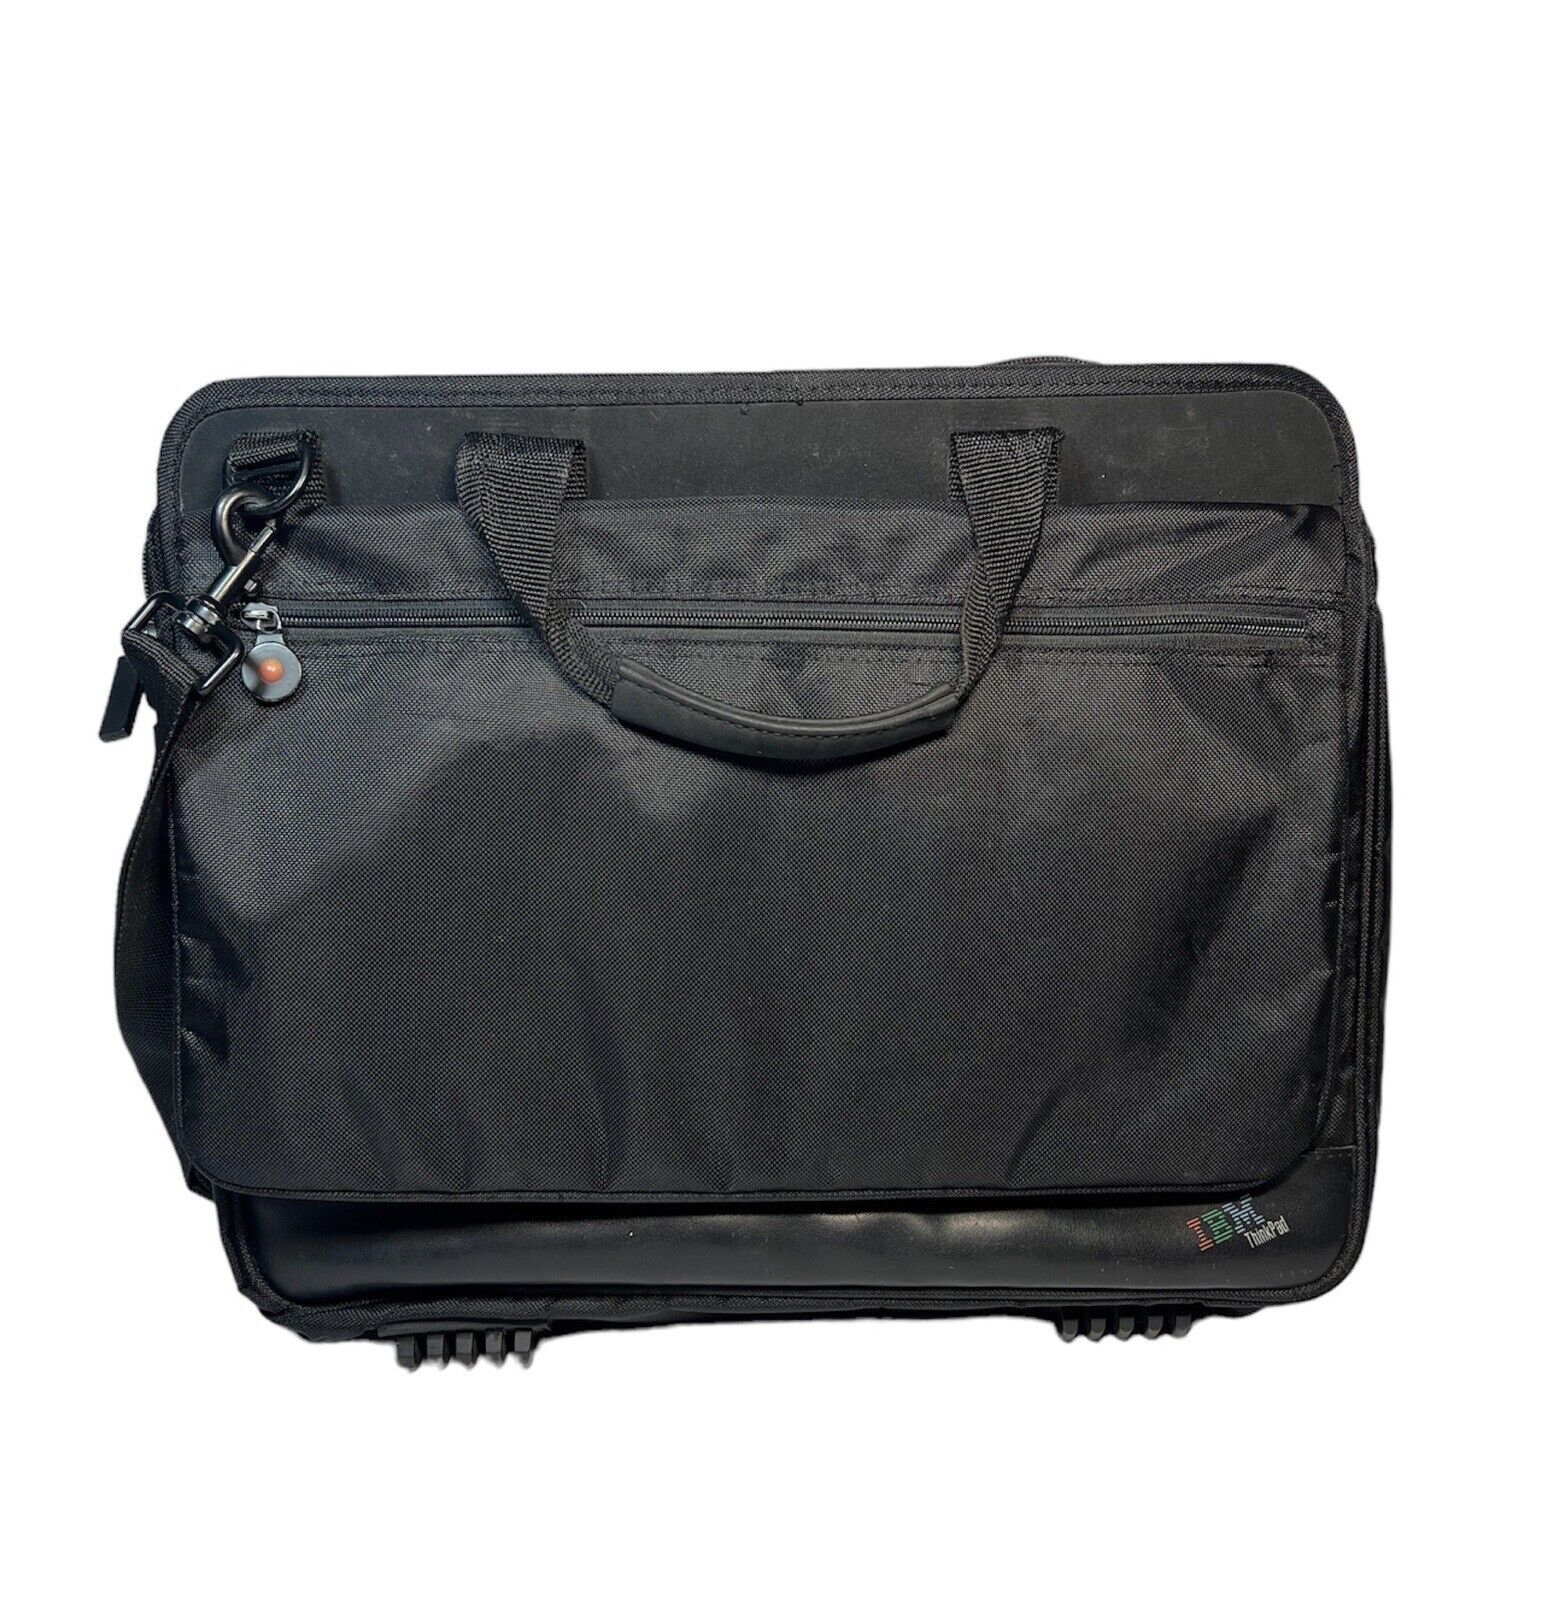 Vintage IBM Thinkpad Black Messenger Bag Padded Laptop Carrying Case Work Travel